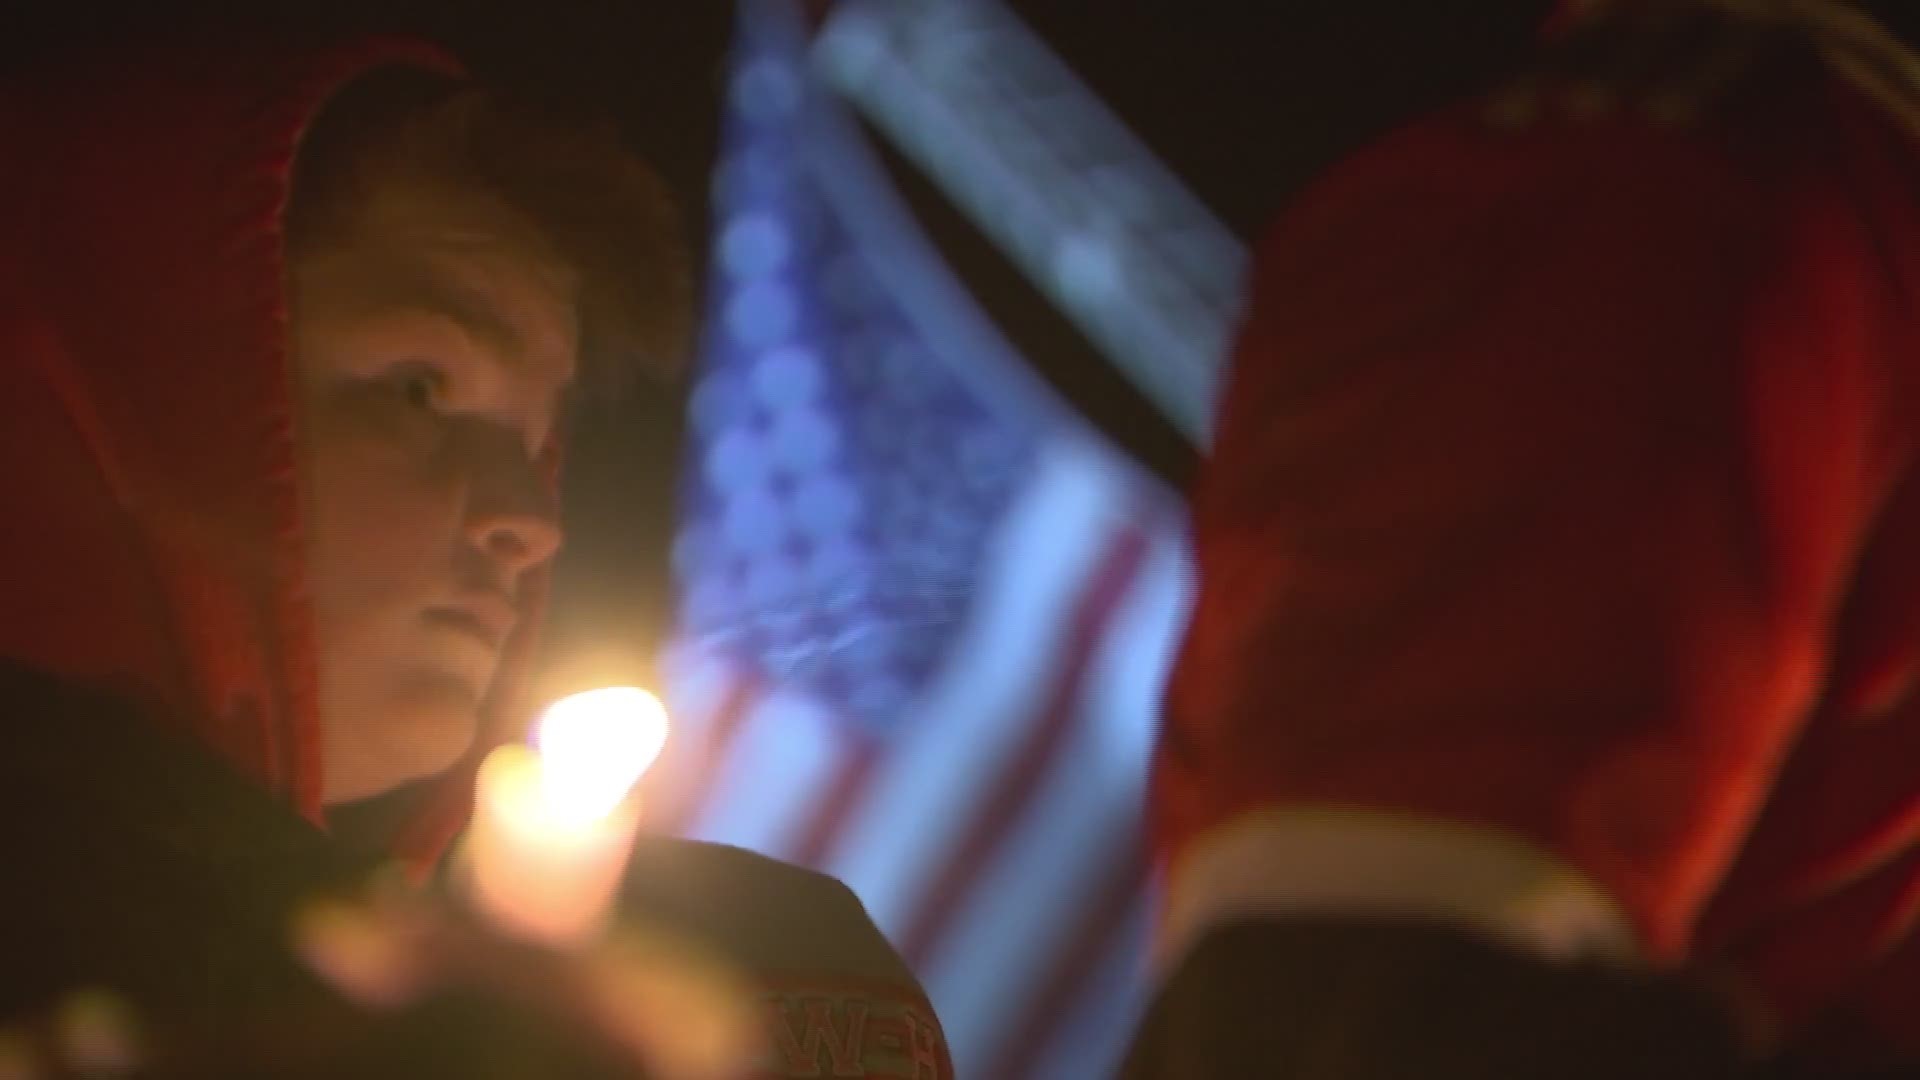 Vigil for family members killed in crash near Disney World